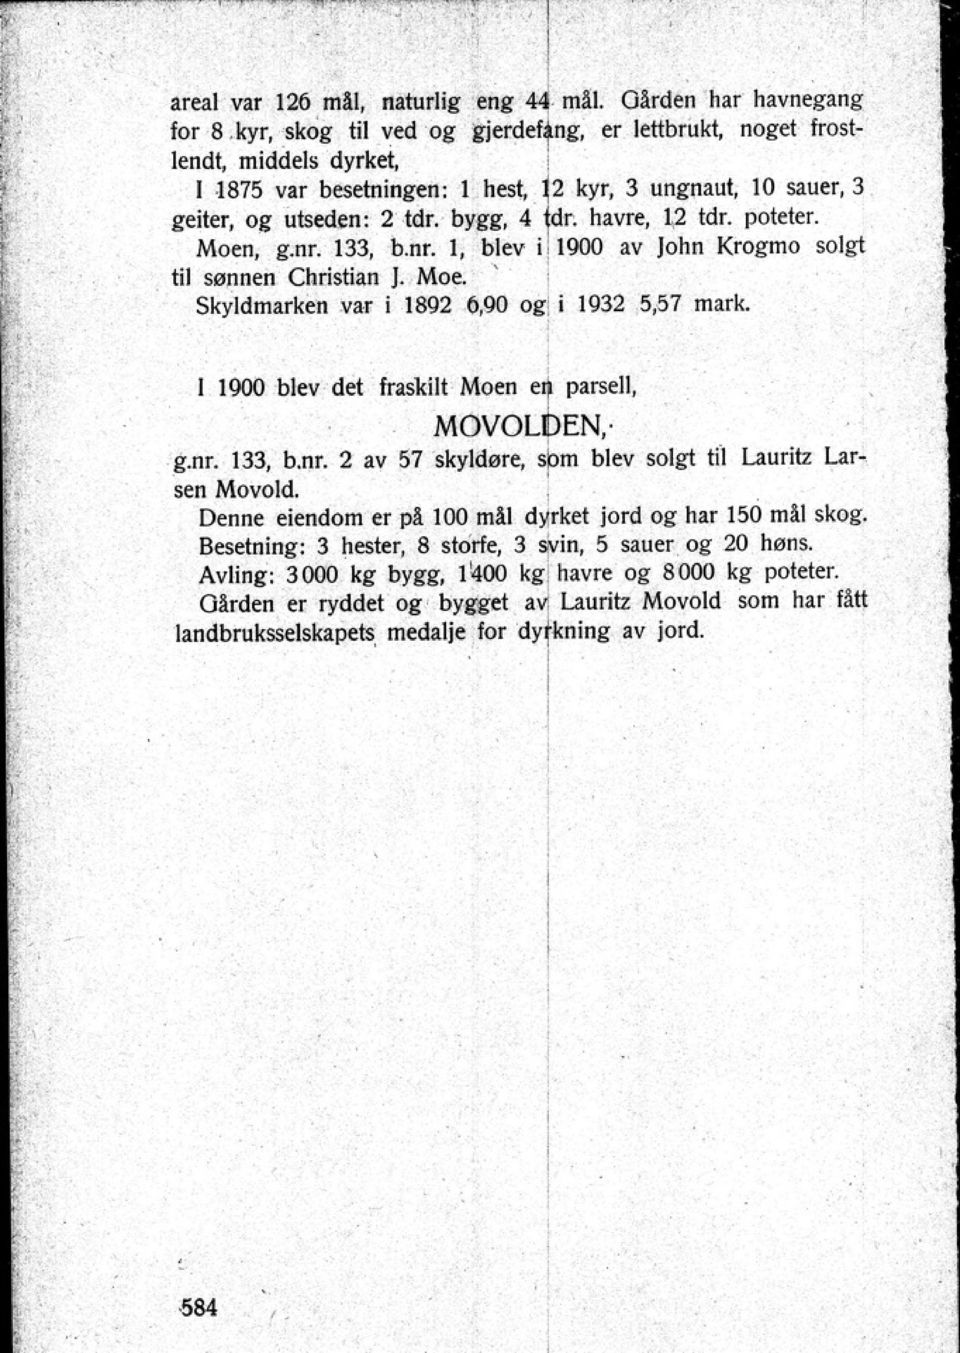 Moen g.nr. 133 b.nt. I blev i 1900 av John Krogmo solgt til sønnen Christian J. Moe. ' I Skyldmarken var i 1892 690 0i' i 1932 551 mark. [ 1900 blev det fl'ltskilt Moen c pa~jl MOVOLDEN. '.nr. 133 b.nt. 2 av 57 skyldøre spm blev solgt lii Lauritz larsen Movold.